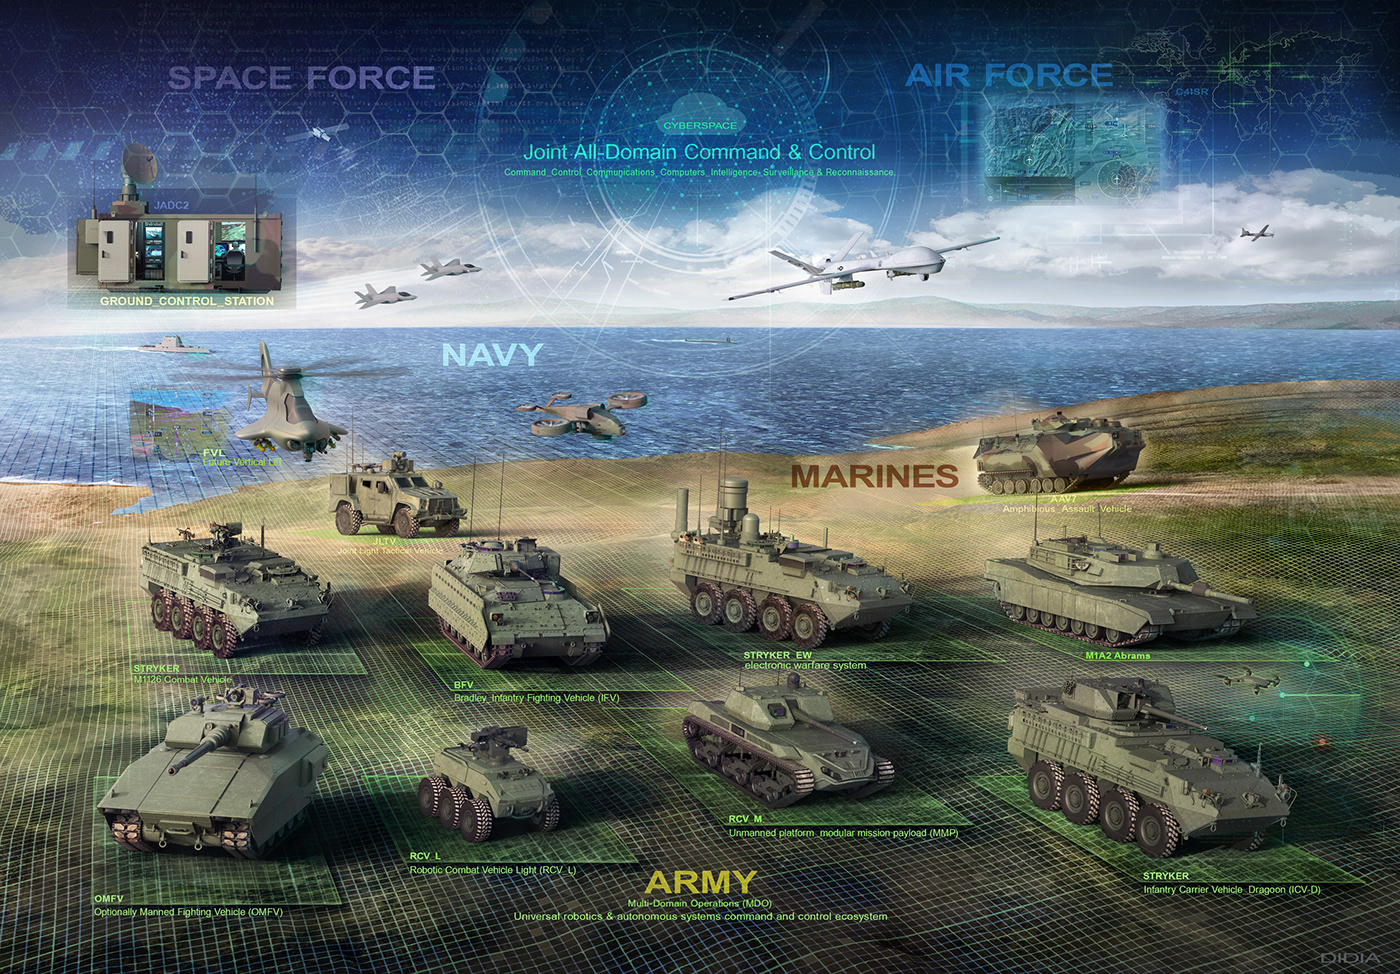 army battle management combat data defense concepts FUTURE BATTLEFIELD JADC2 keyshot project convergence Military concept project quarterback